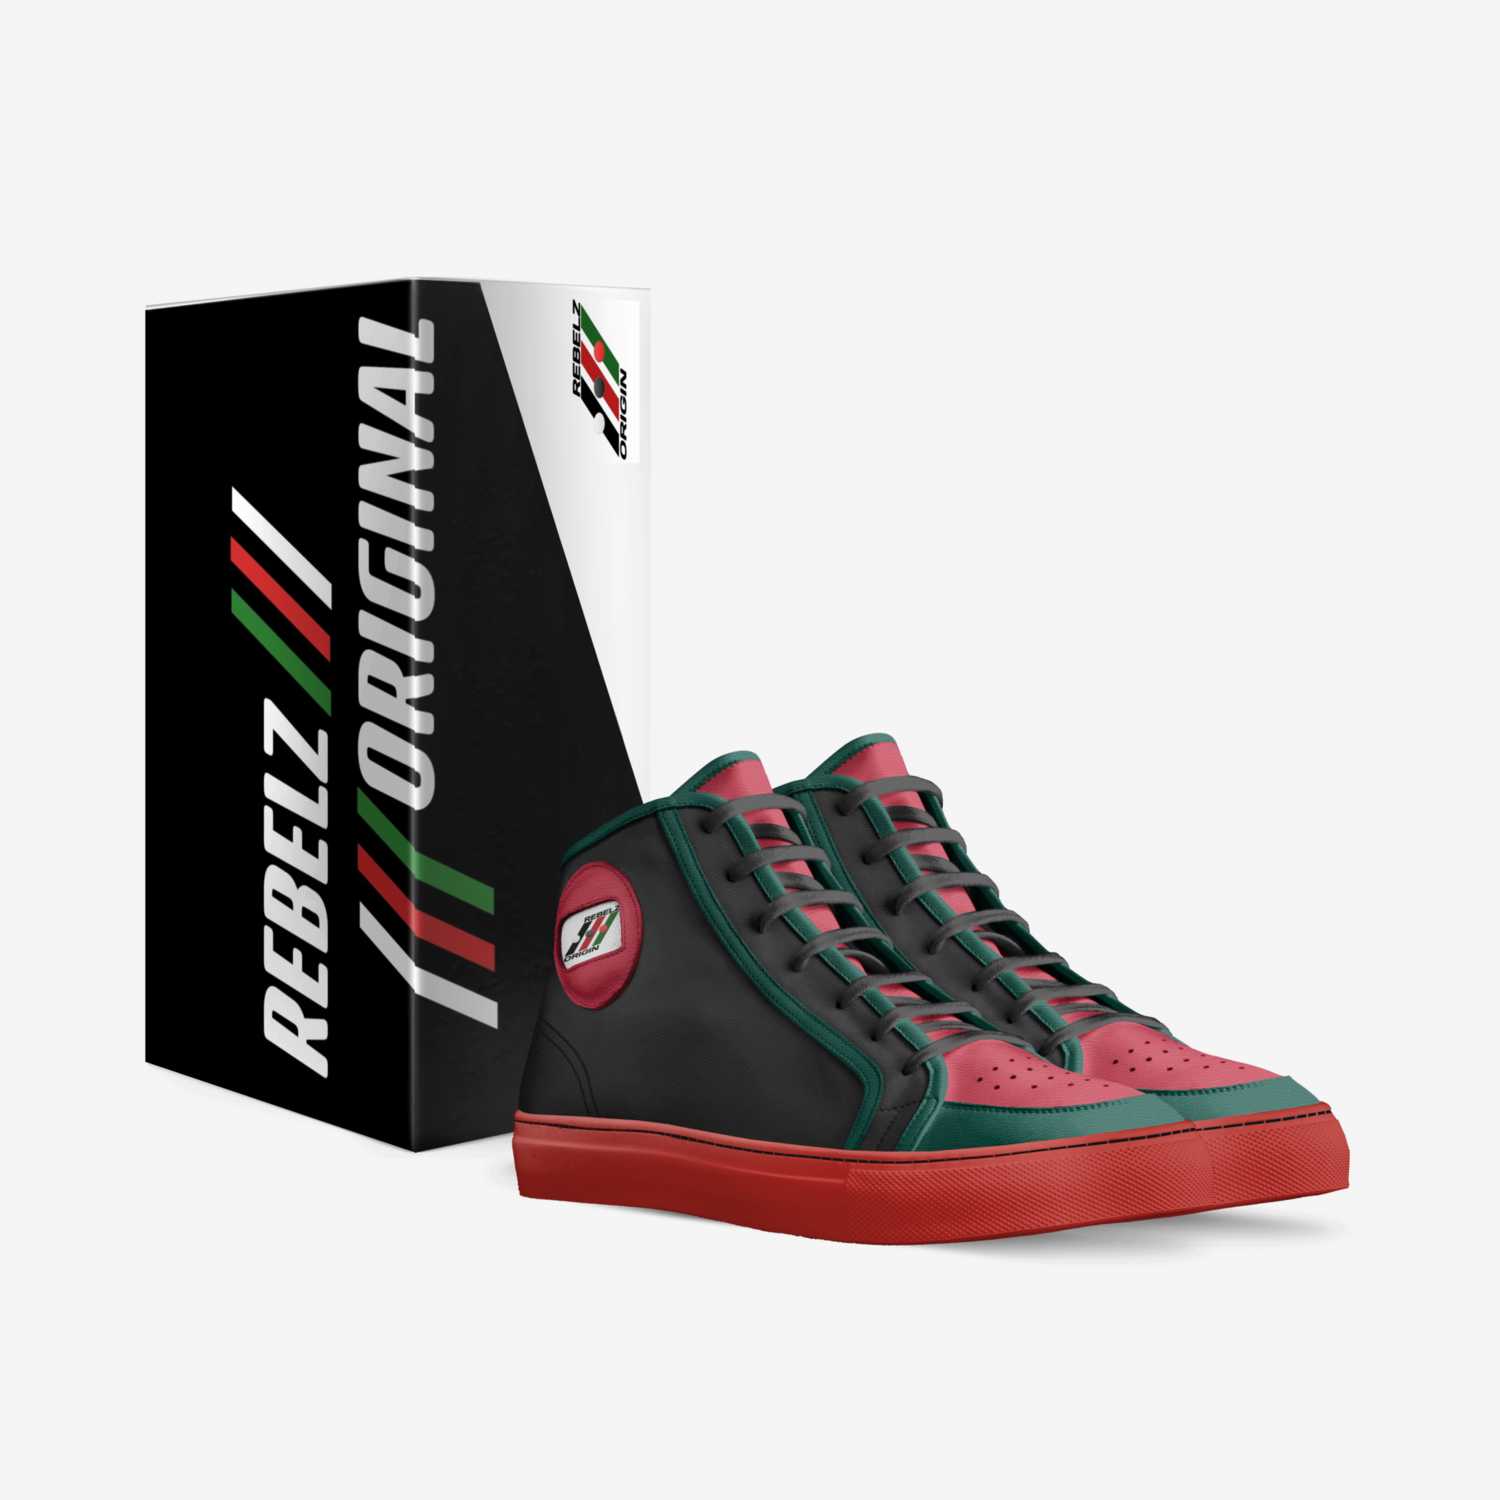 REBELZ ORIGINAL custom made in Italy shoes by Angel Ruiz Garcia | Box view